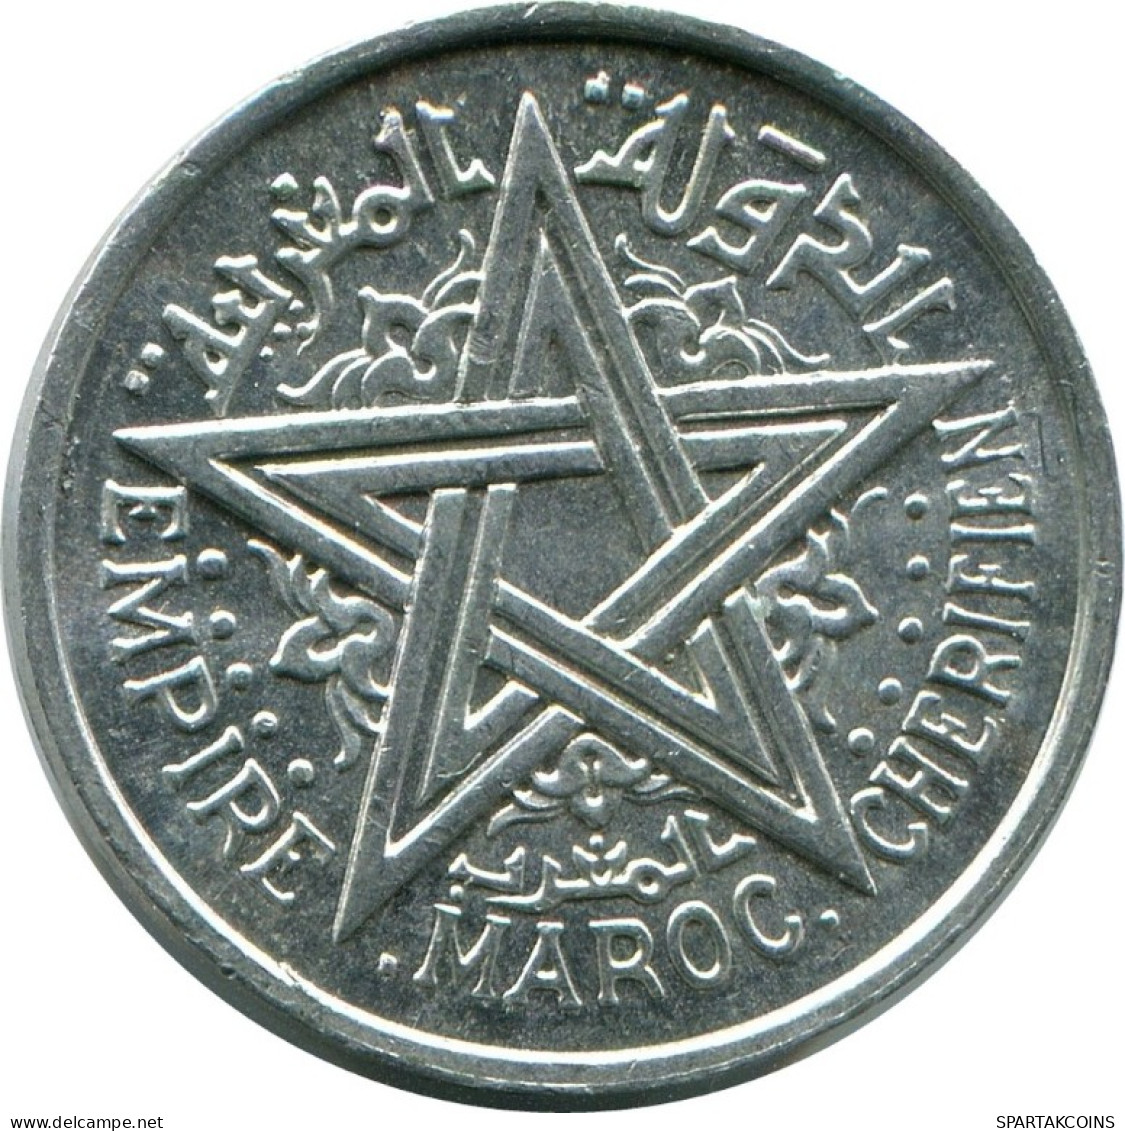 1 FRANCS 1951 MOROCCO Mohammed V Coin #AH920.U.A - Morocco